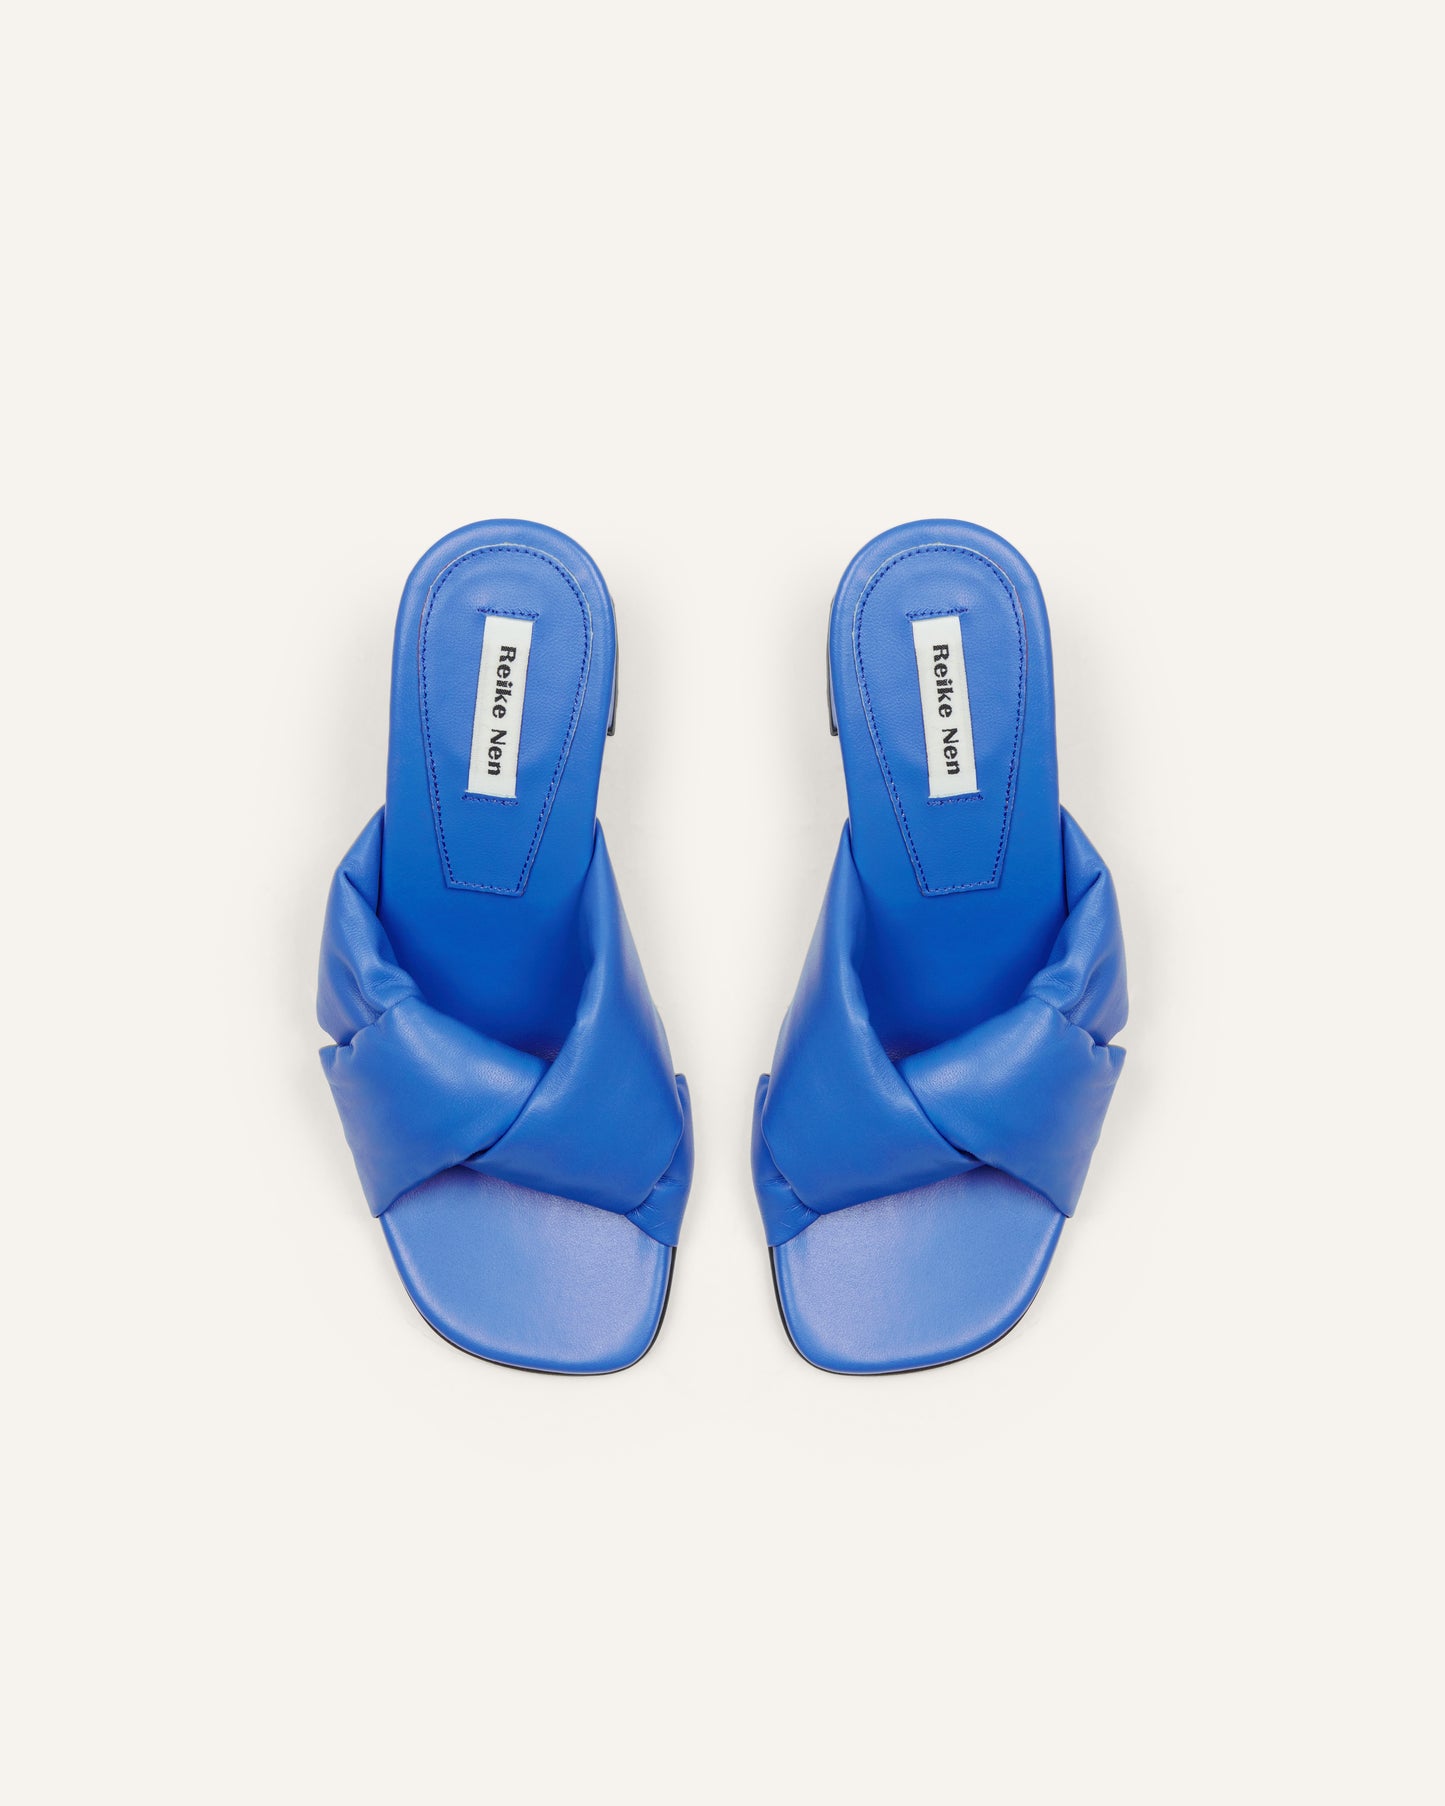 Yeji Twisted Sandals Blue